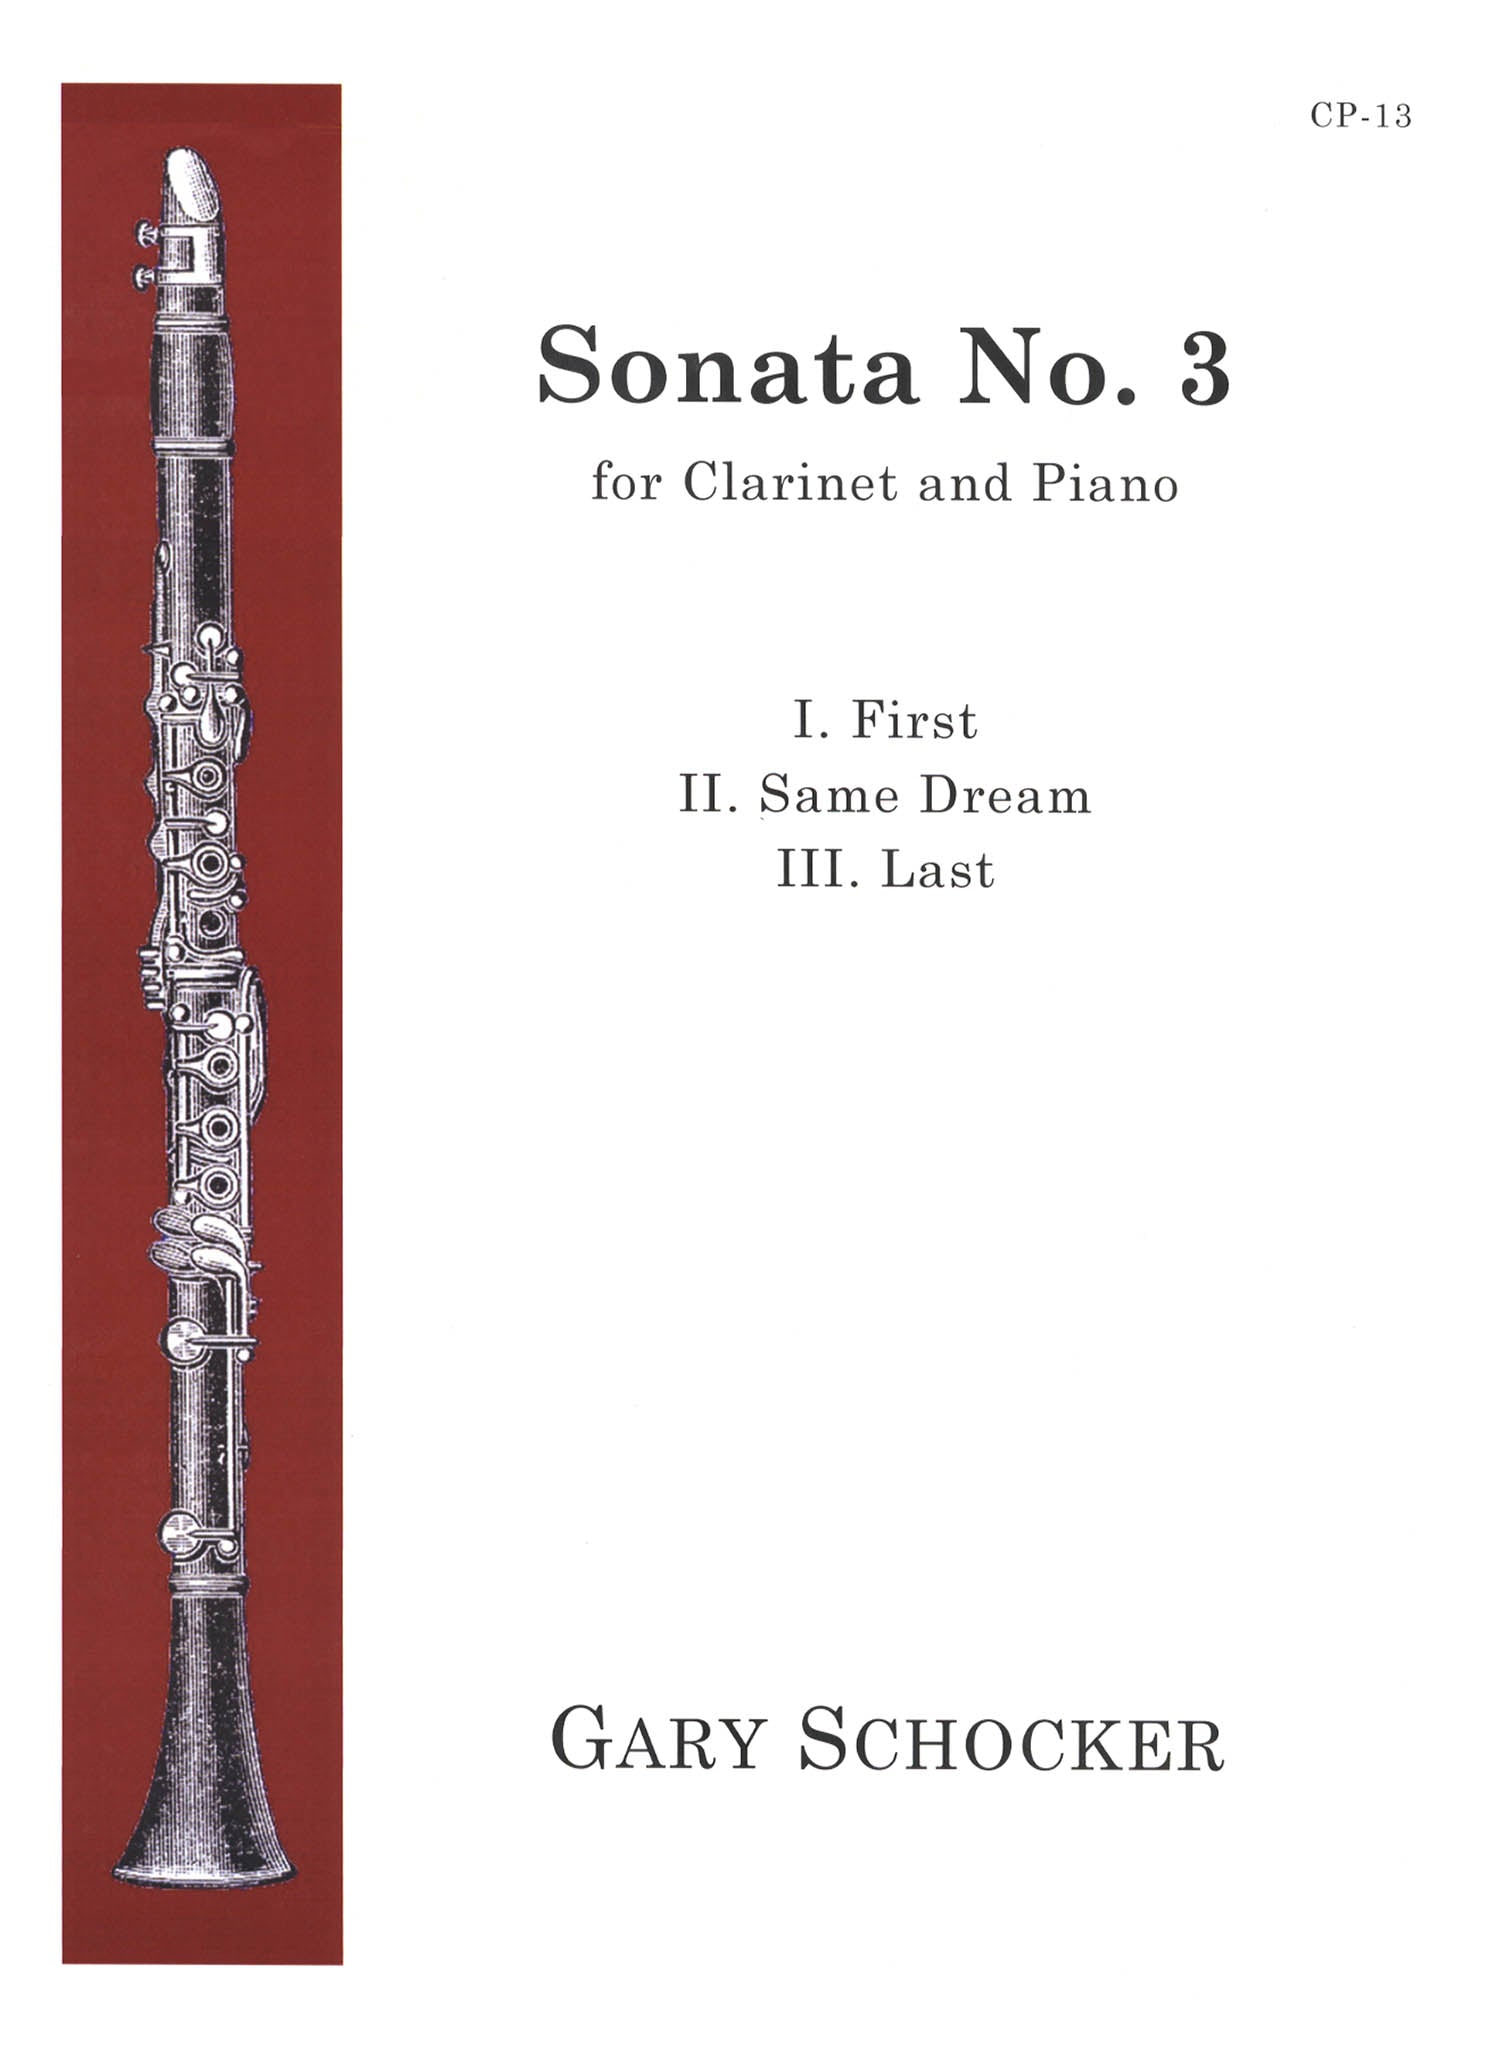 Schocker Clarinet Sonata No. 3 cover